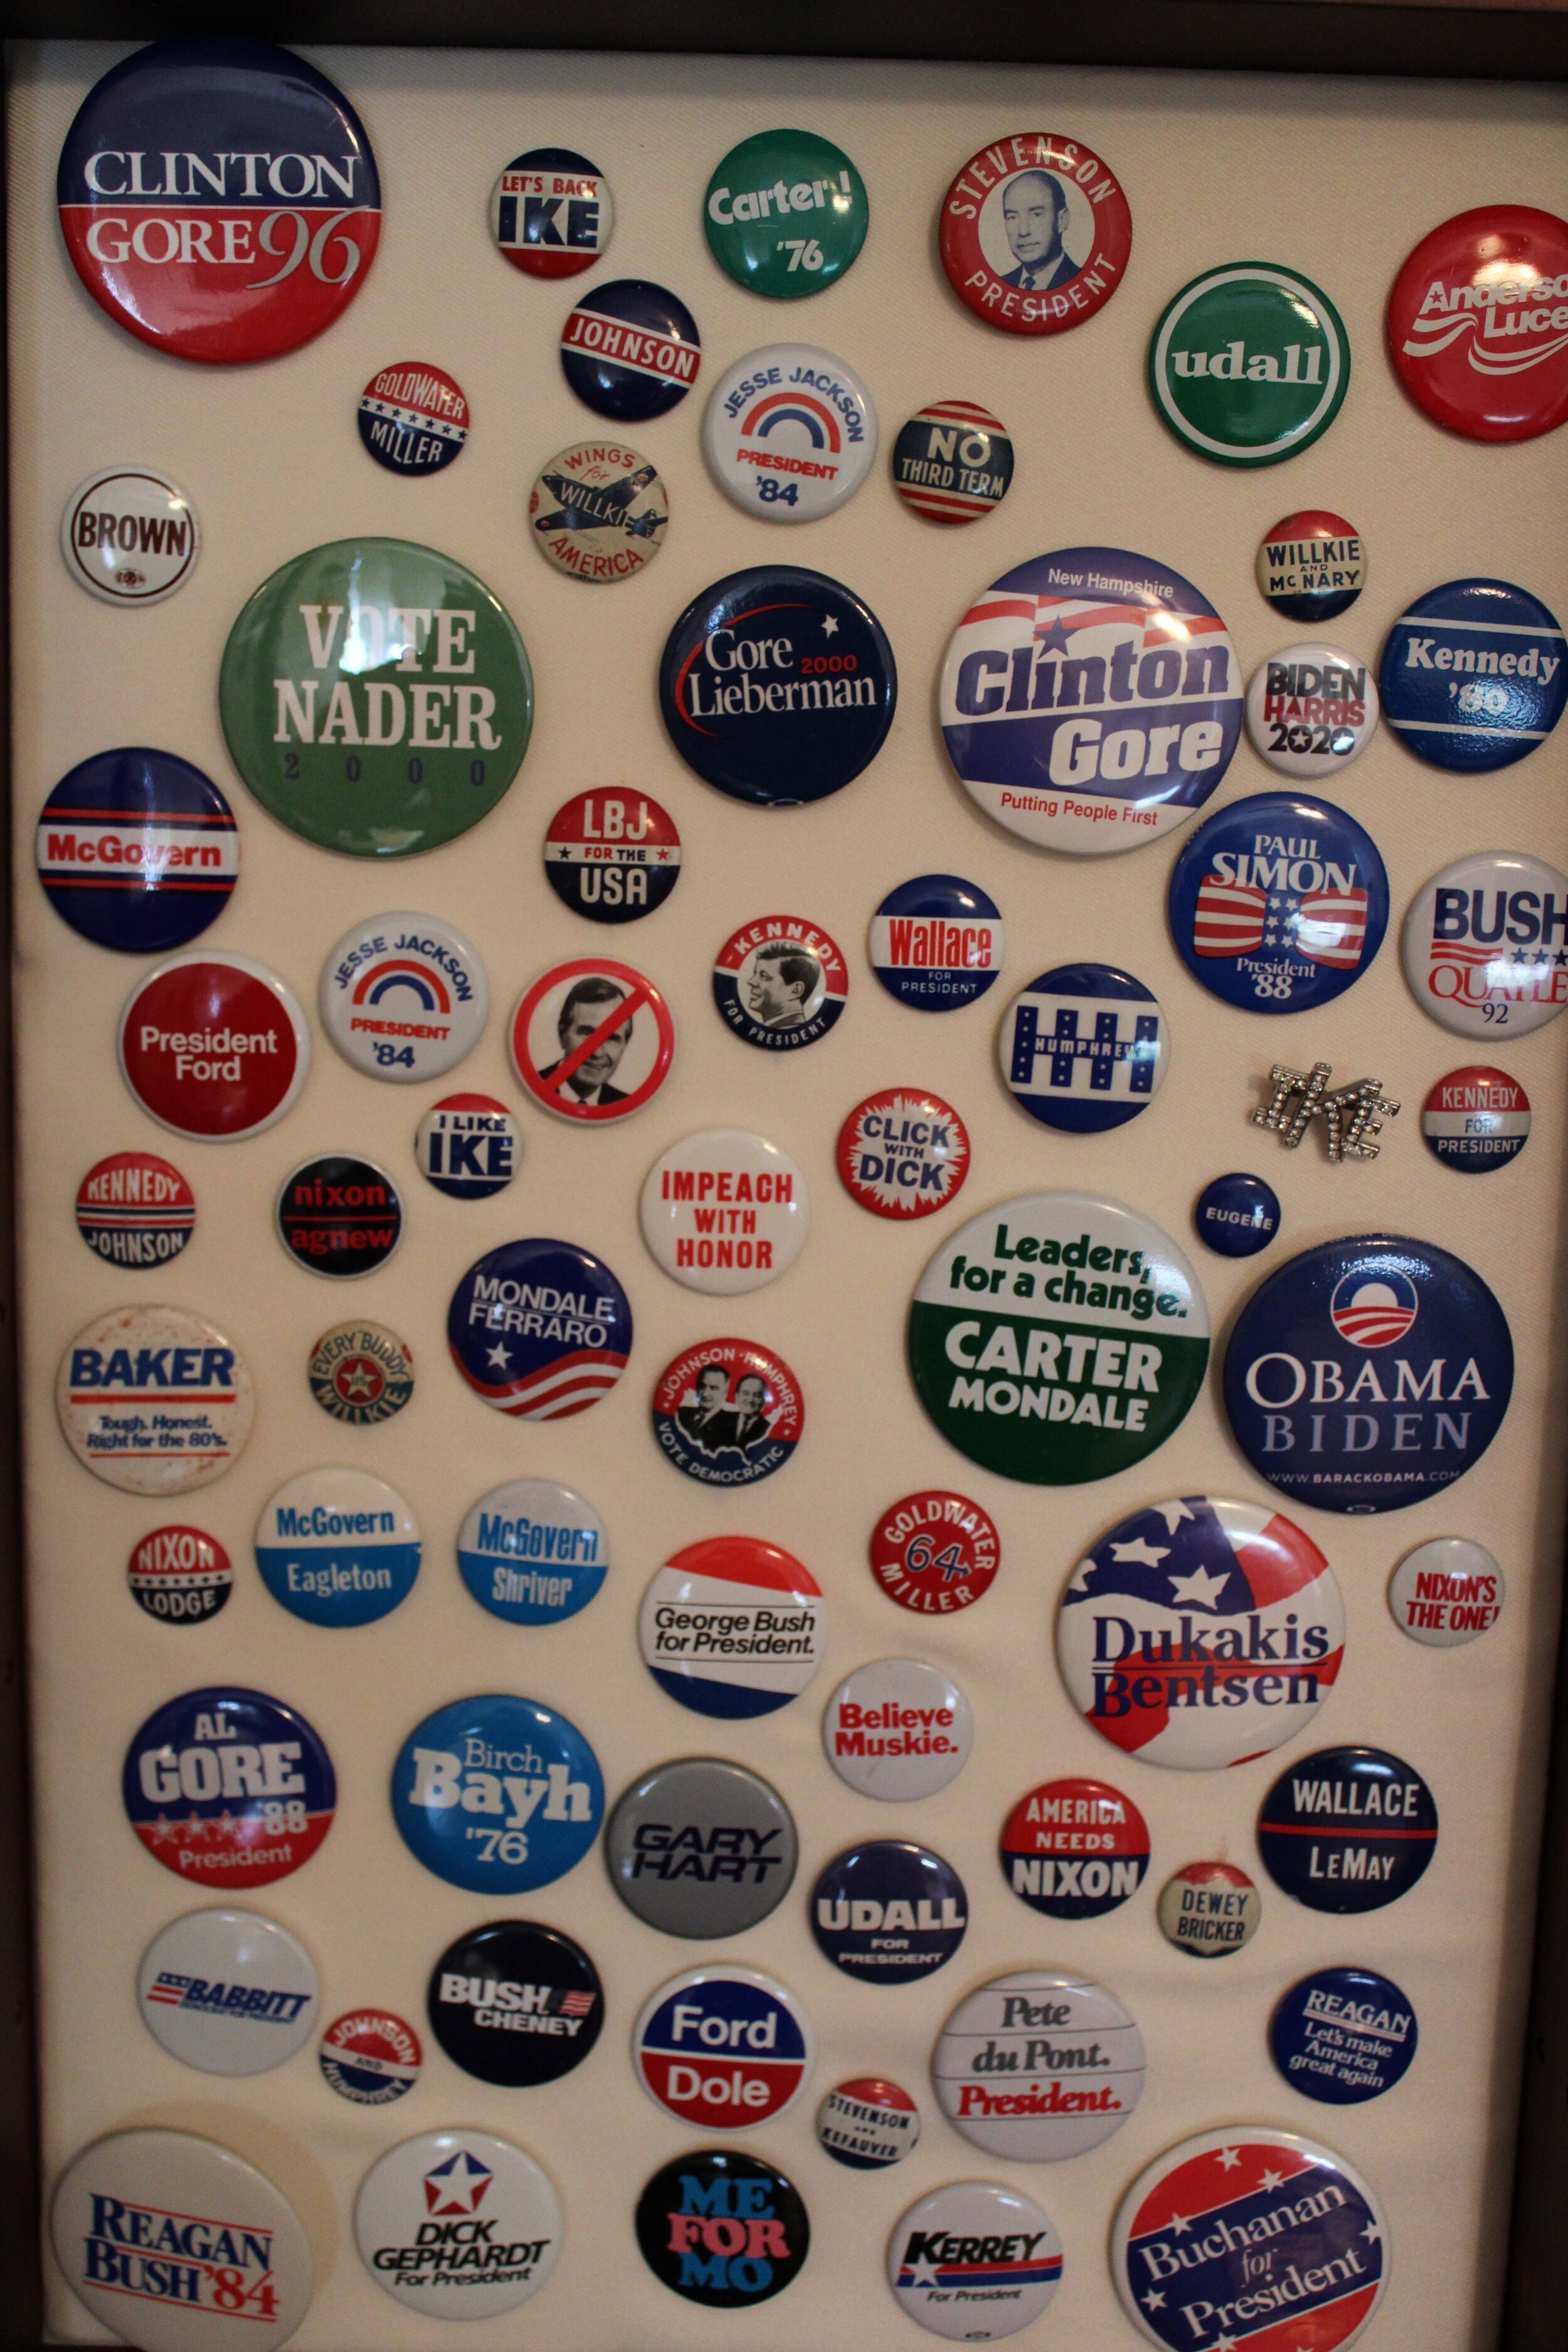 1948 HARRY TRUMAN campaign pin pinback button political presidential election 